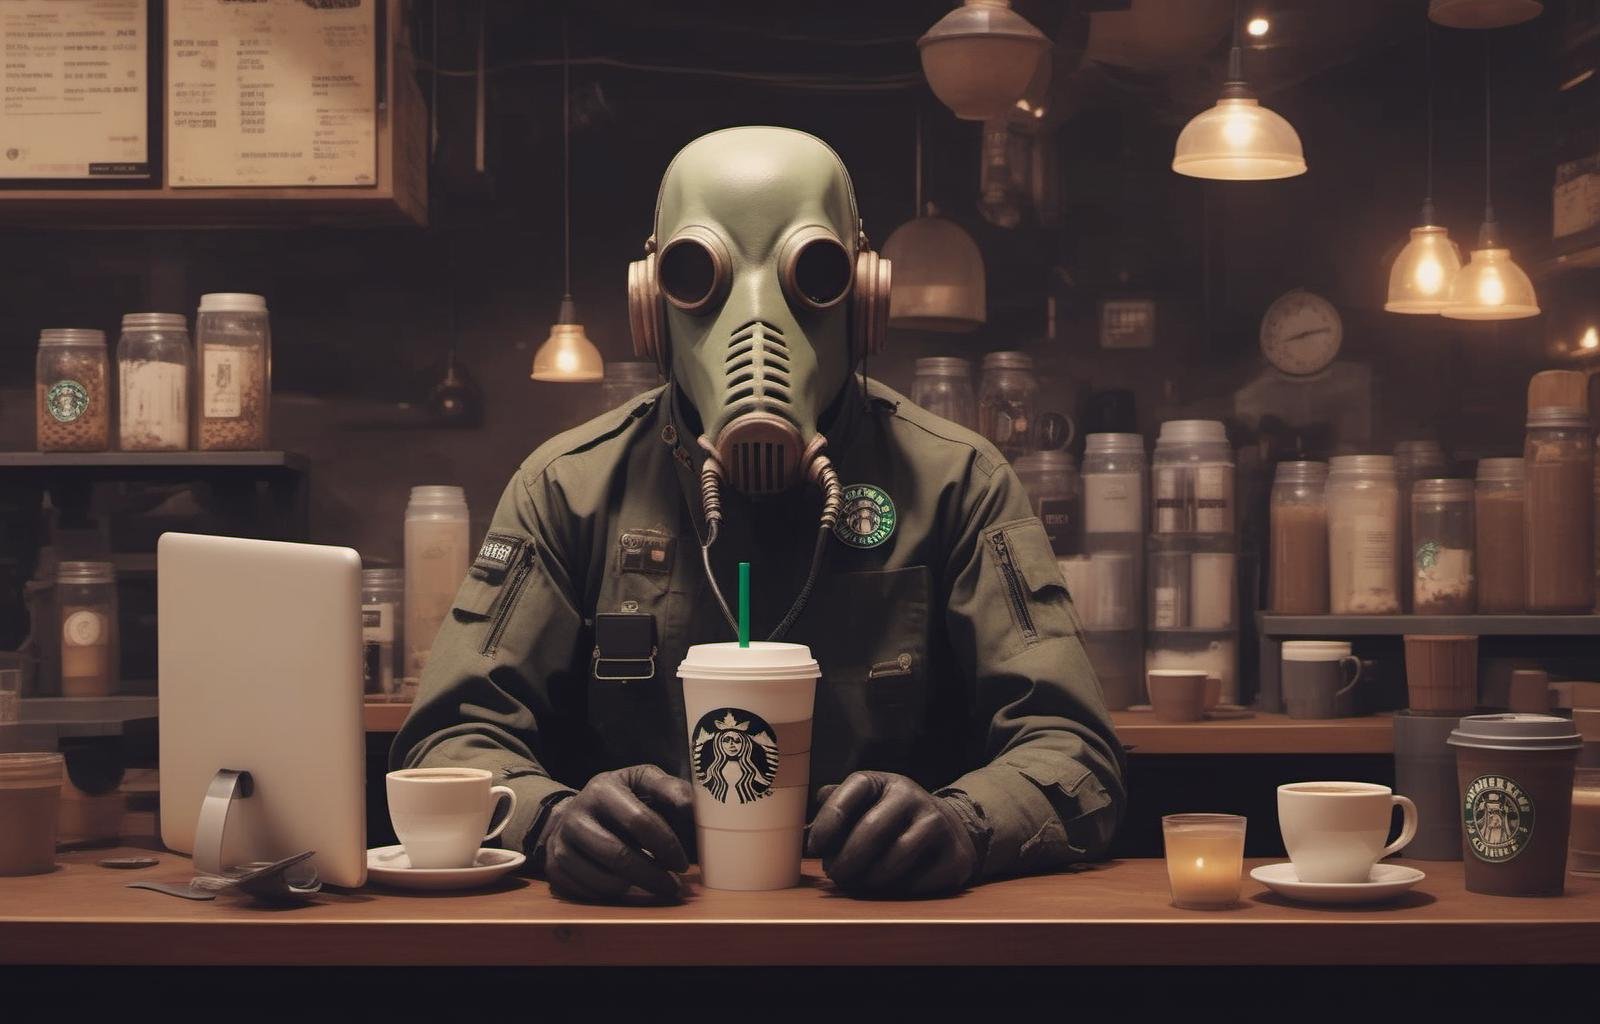 <lora:SDXL Grab-Bag-2 - Gasmask Guys - Trigger is grbtw artstyle:.8> Starbucks coffee, grbtw artstyle